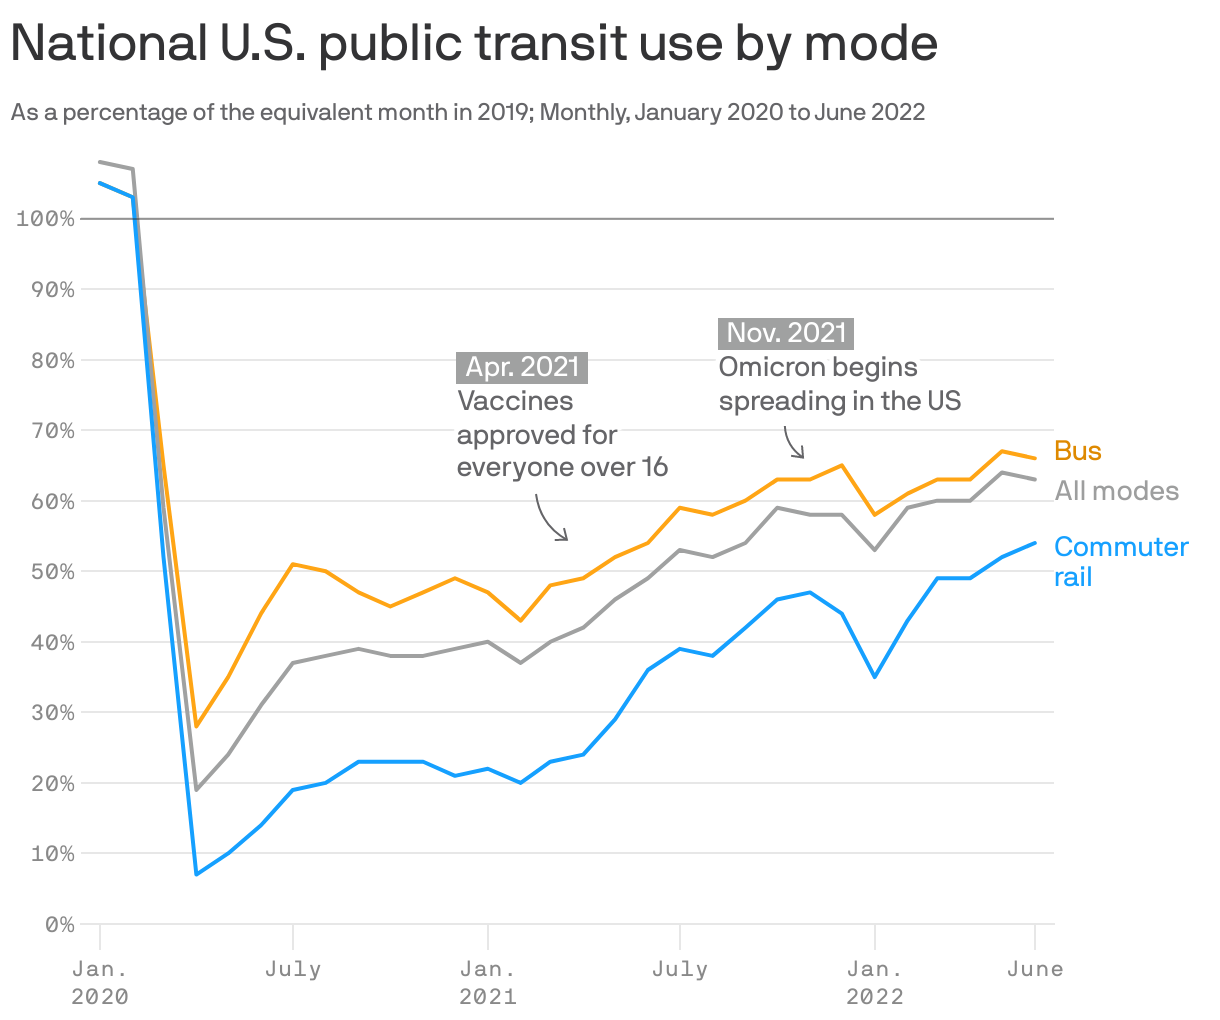 National U.S. public transit use by mode